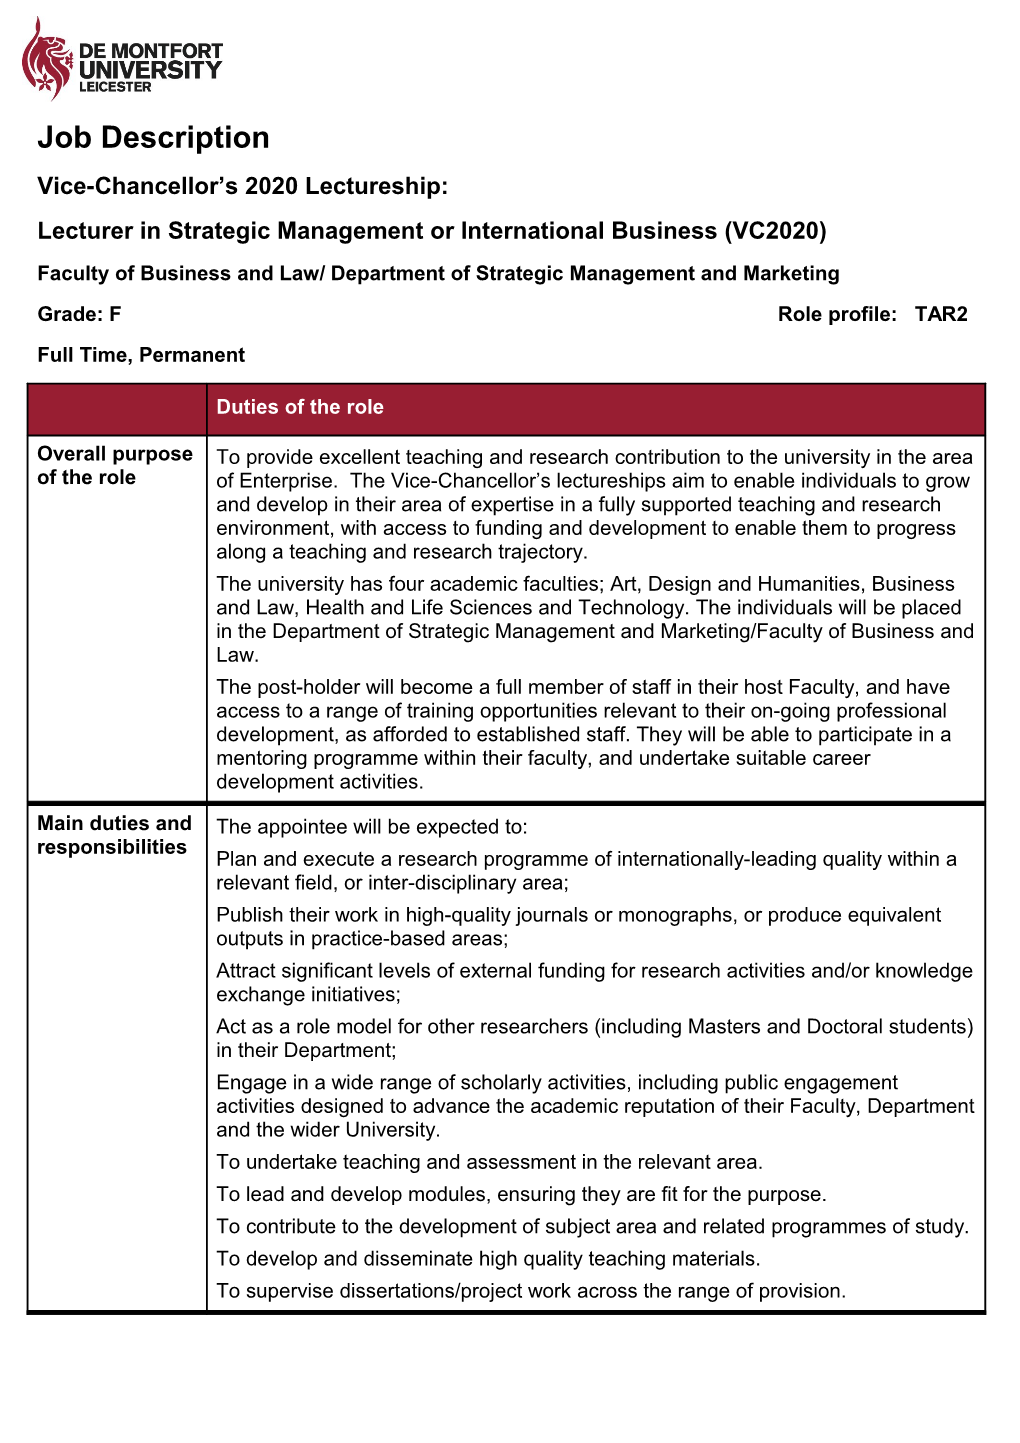 Lecturer in Strategic Management Or International Business (VC2020)